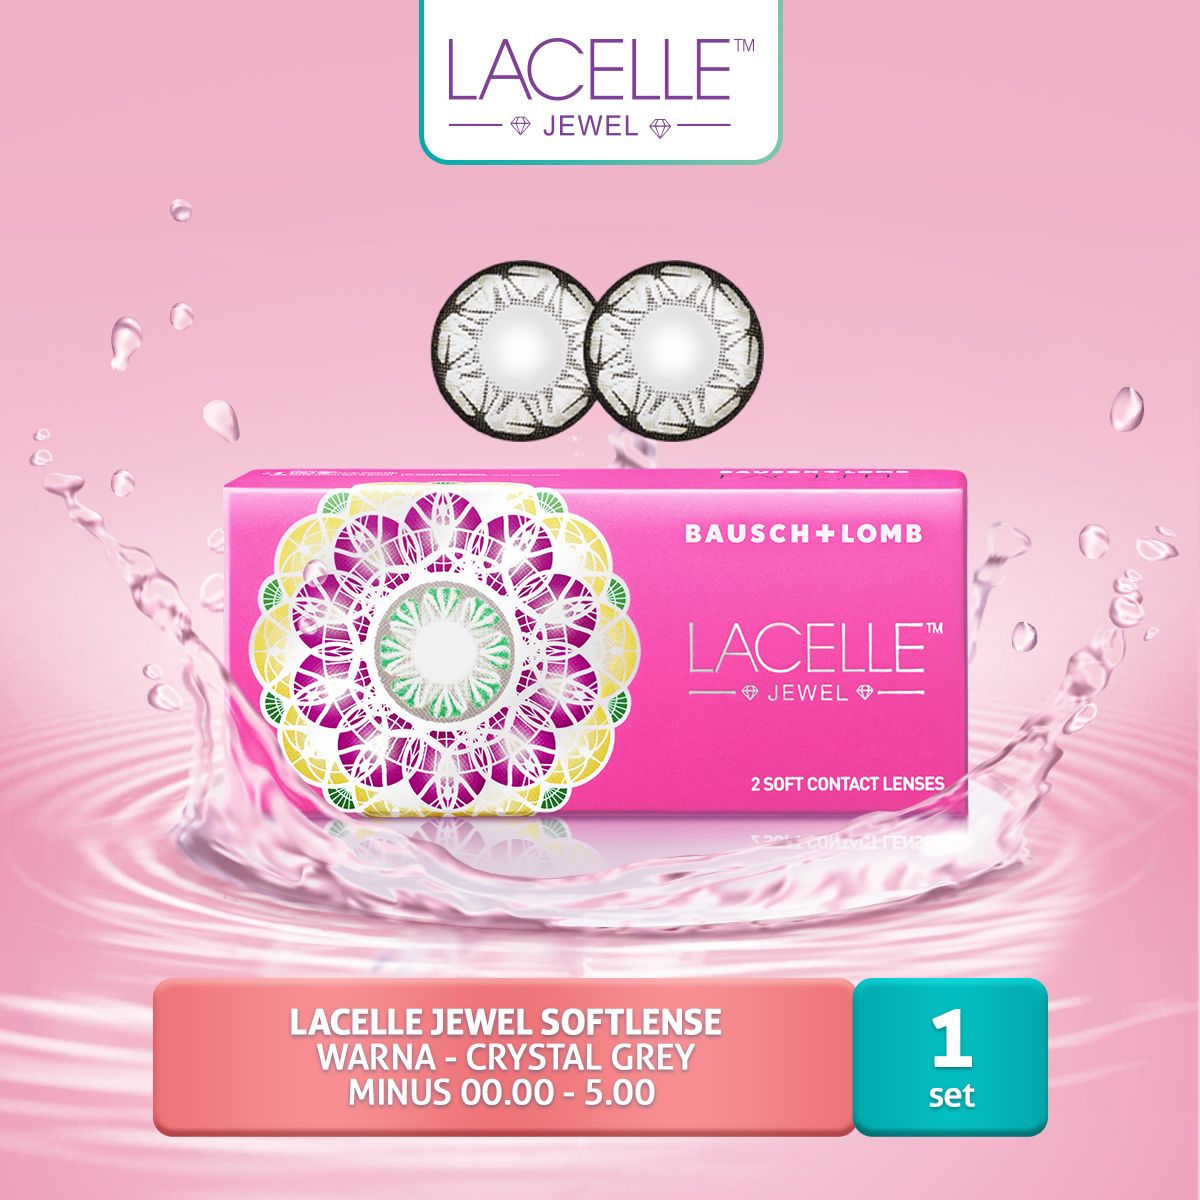 Lacelle Jewel Softlense Warna - Crystal Gray -1.00 - 1